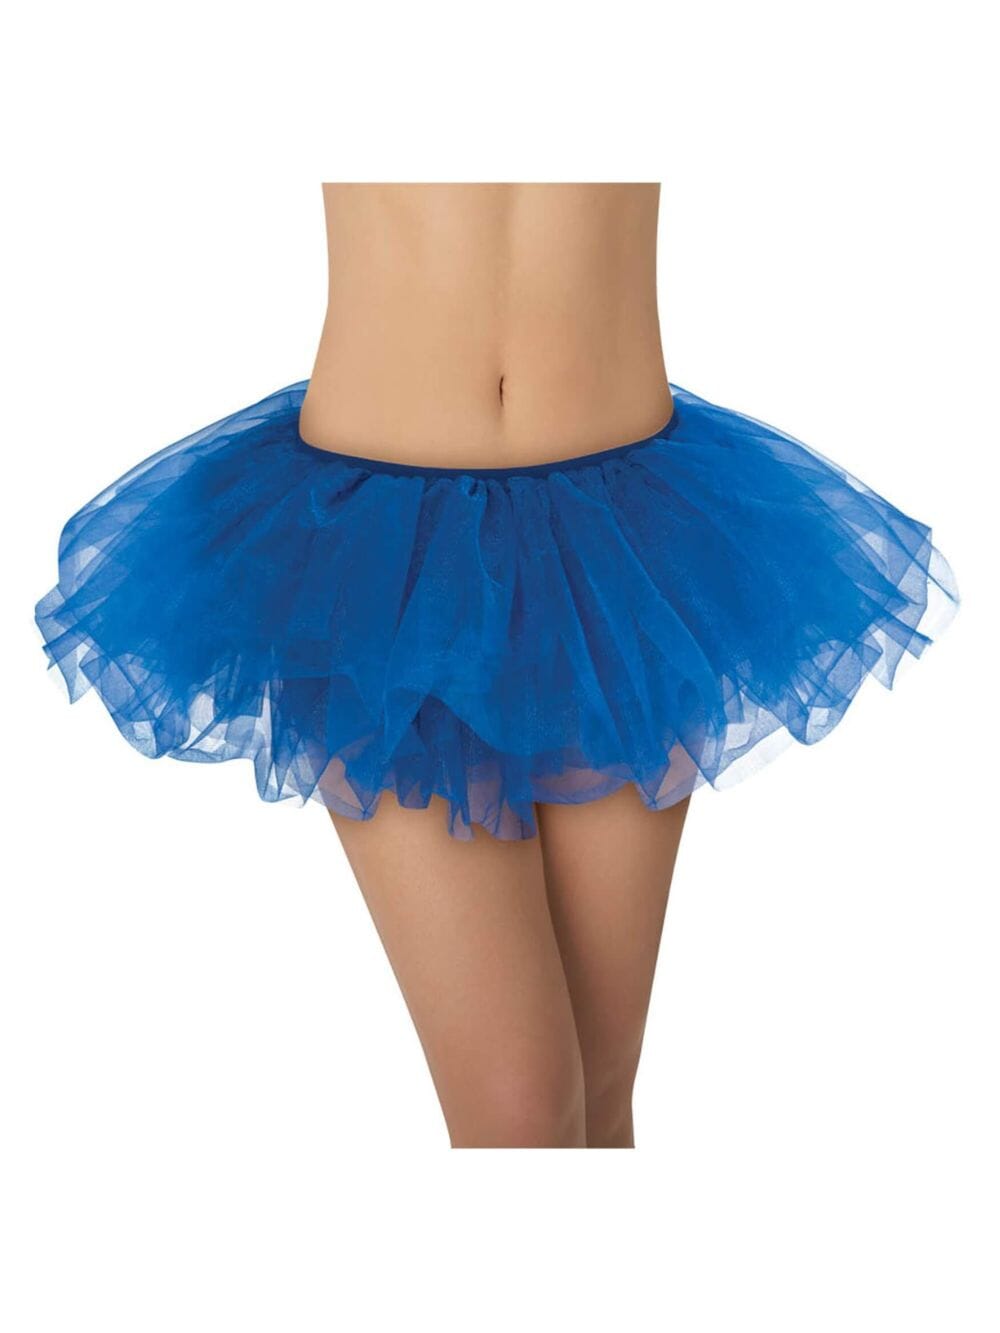 Royal Blue - 5 Layer Tutu Skirt for Running, Dress-Up, Costumes - Sydney So Sweet